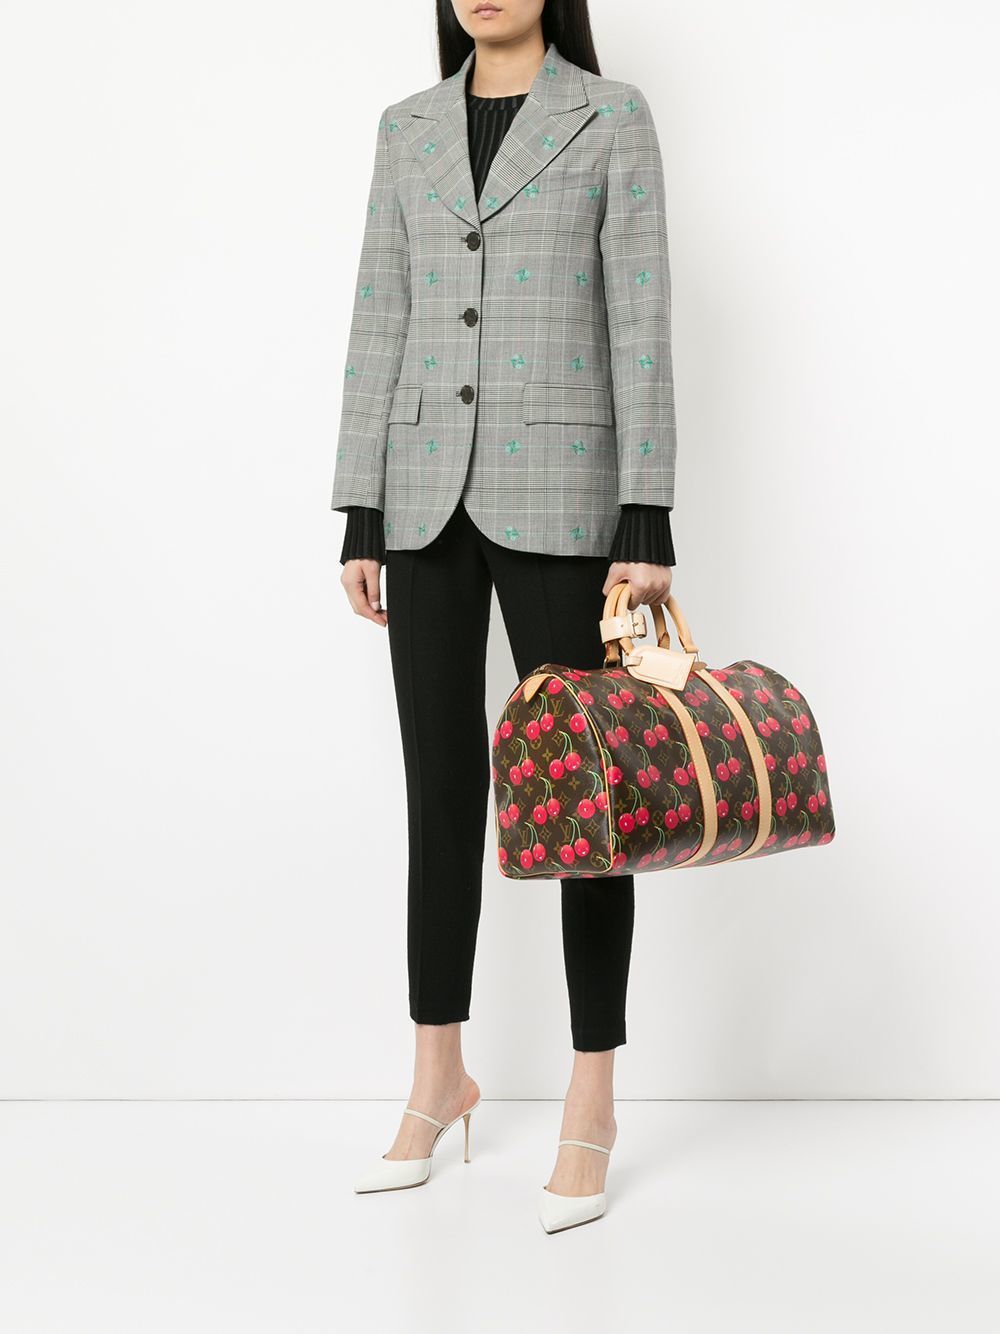 Louis Vuitton Vintage Cherry Keepall 45 Travel Handbag, $10,702, farfetch.com